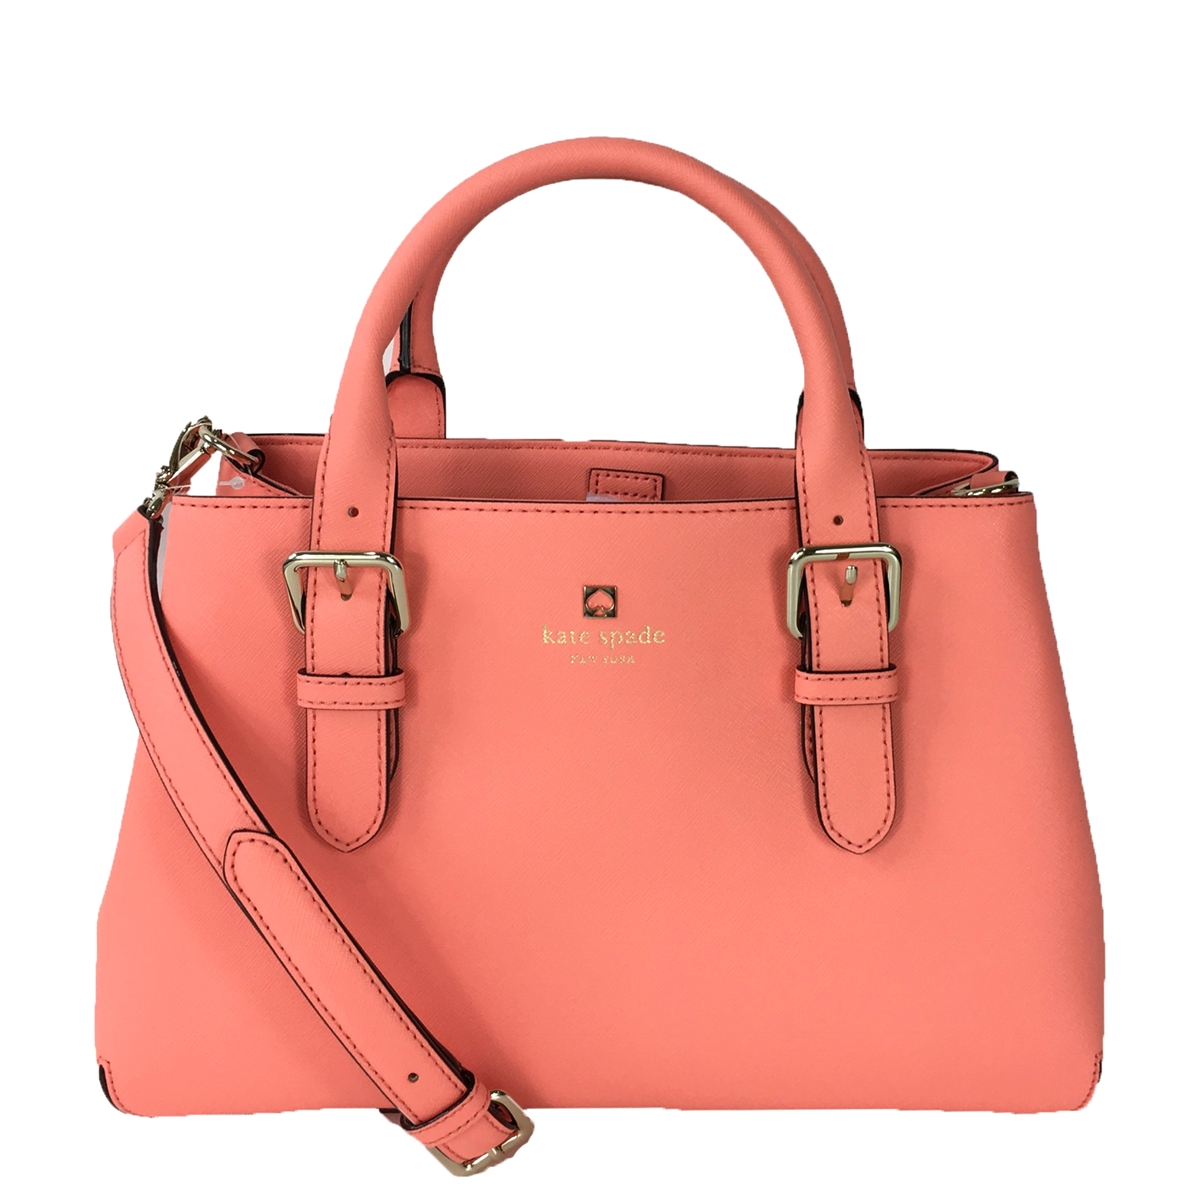 KATE SPADE New York Cedar Street Maise Red Handbag Purse PXRU4471 | eBay